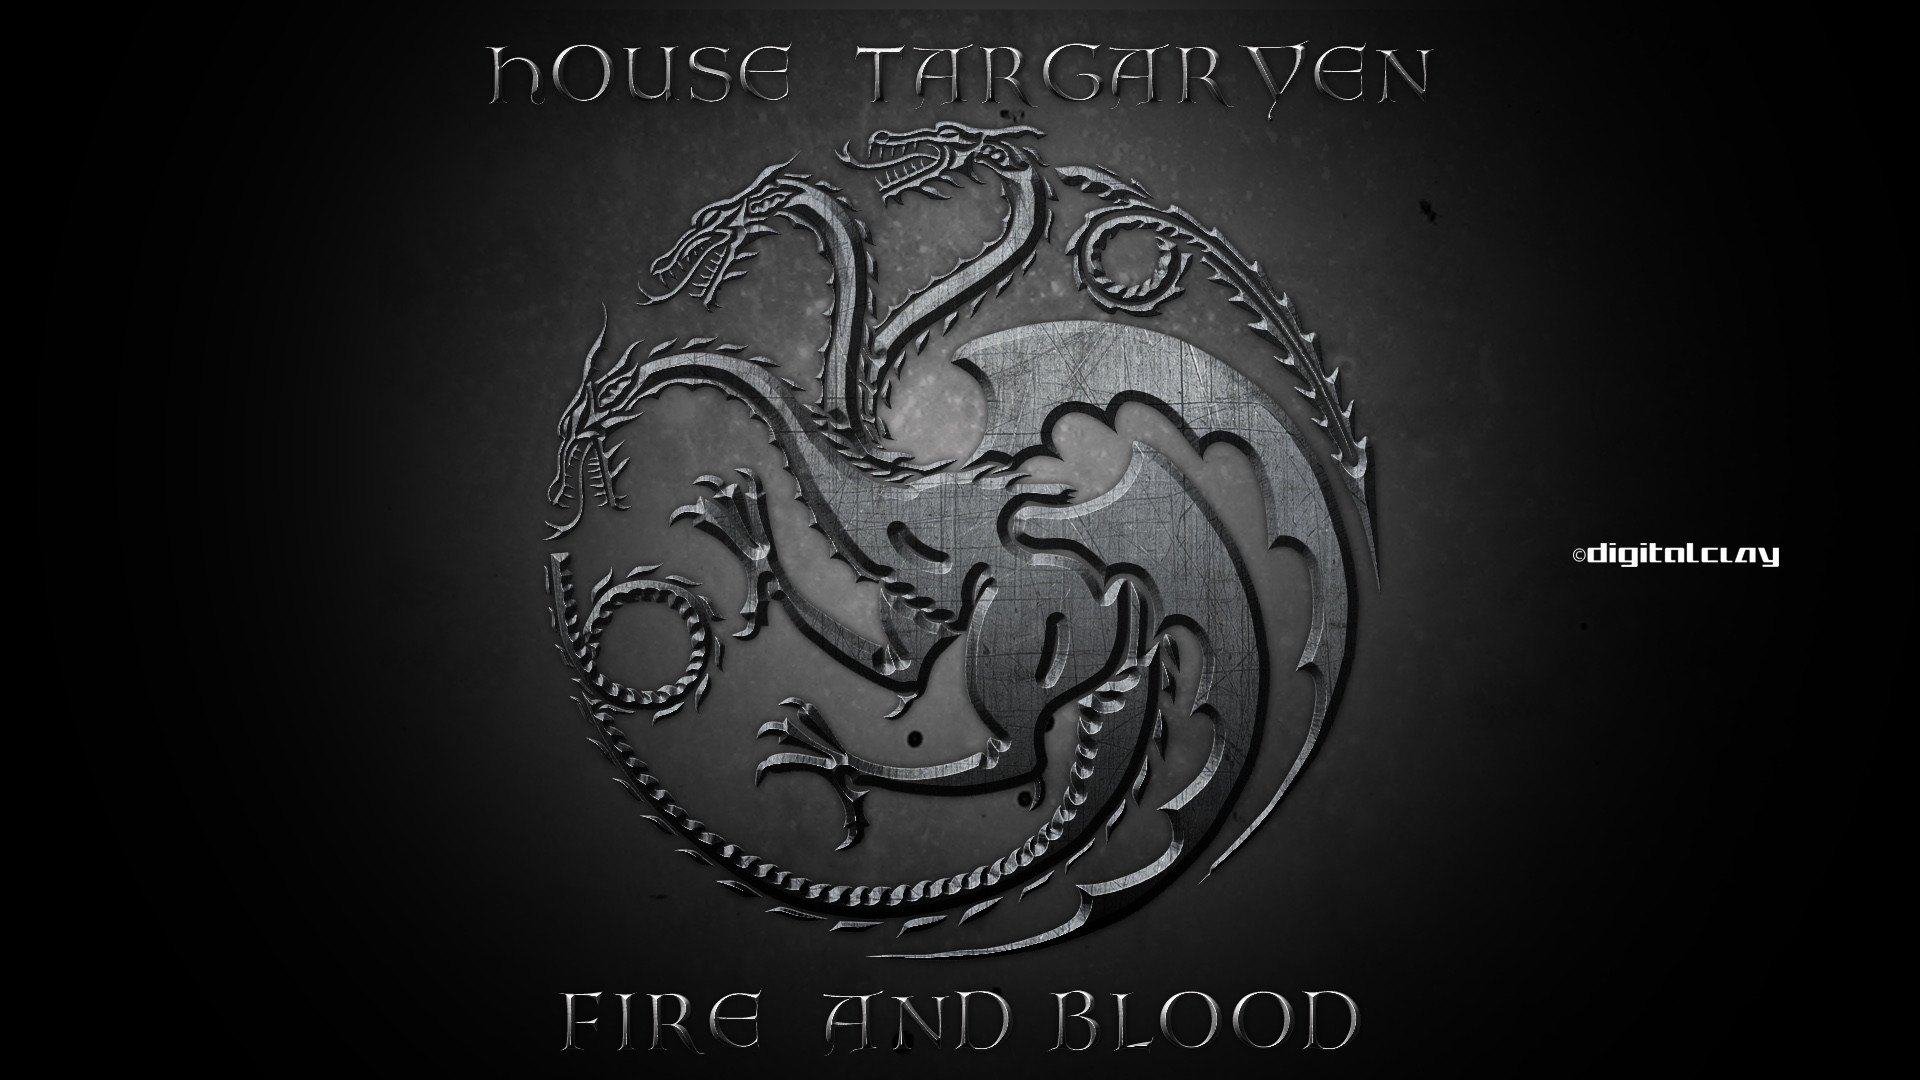 1920x1080 ... mrminutuslausus House Targaryen Banner type 2 by mrminutuslausus